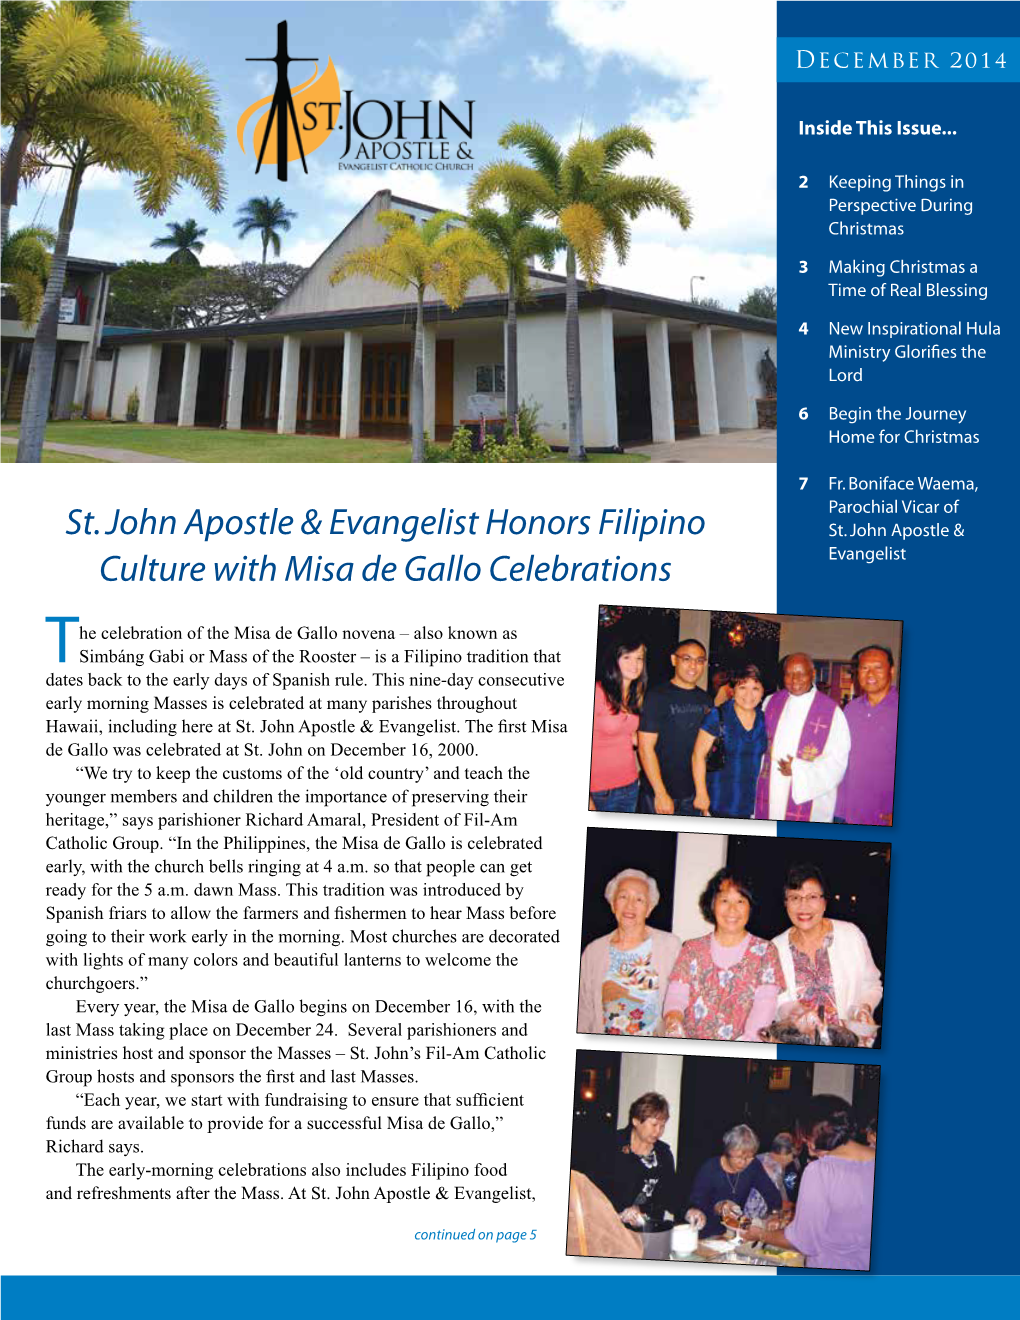 St. John Apostle & Evangelist Honors Filipino Culture with Misa De Gallo